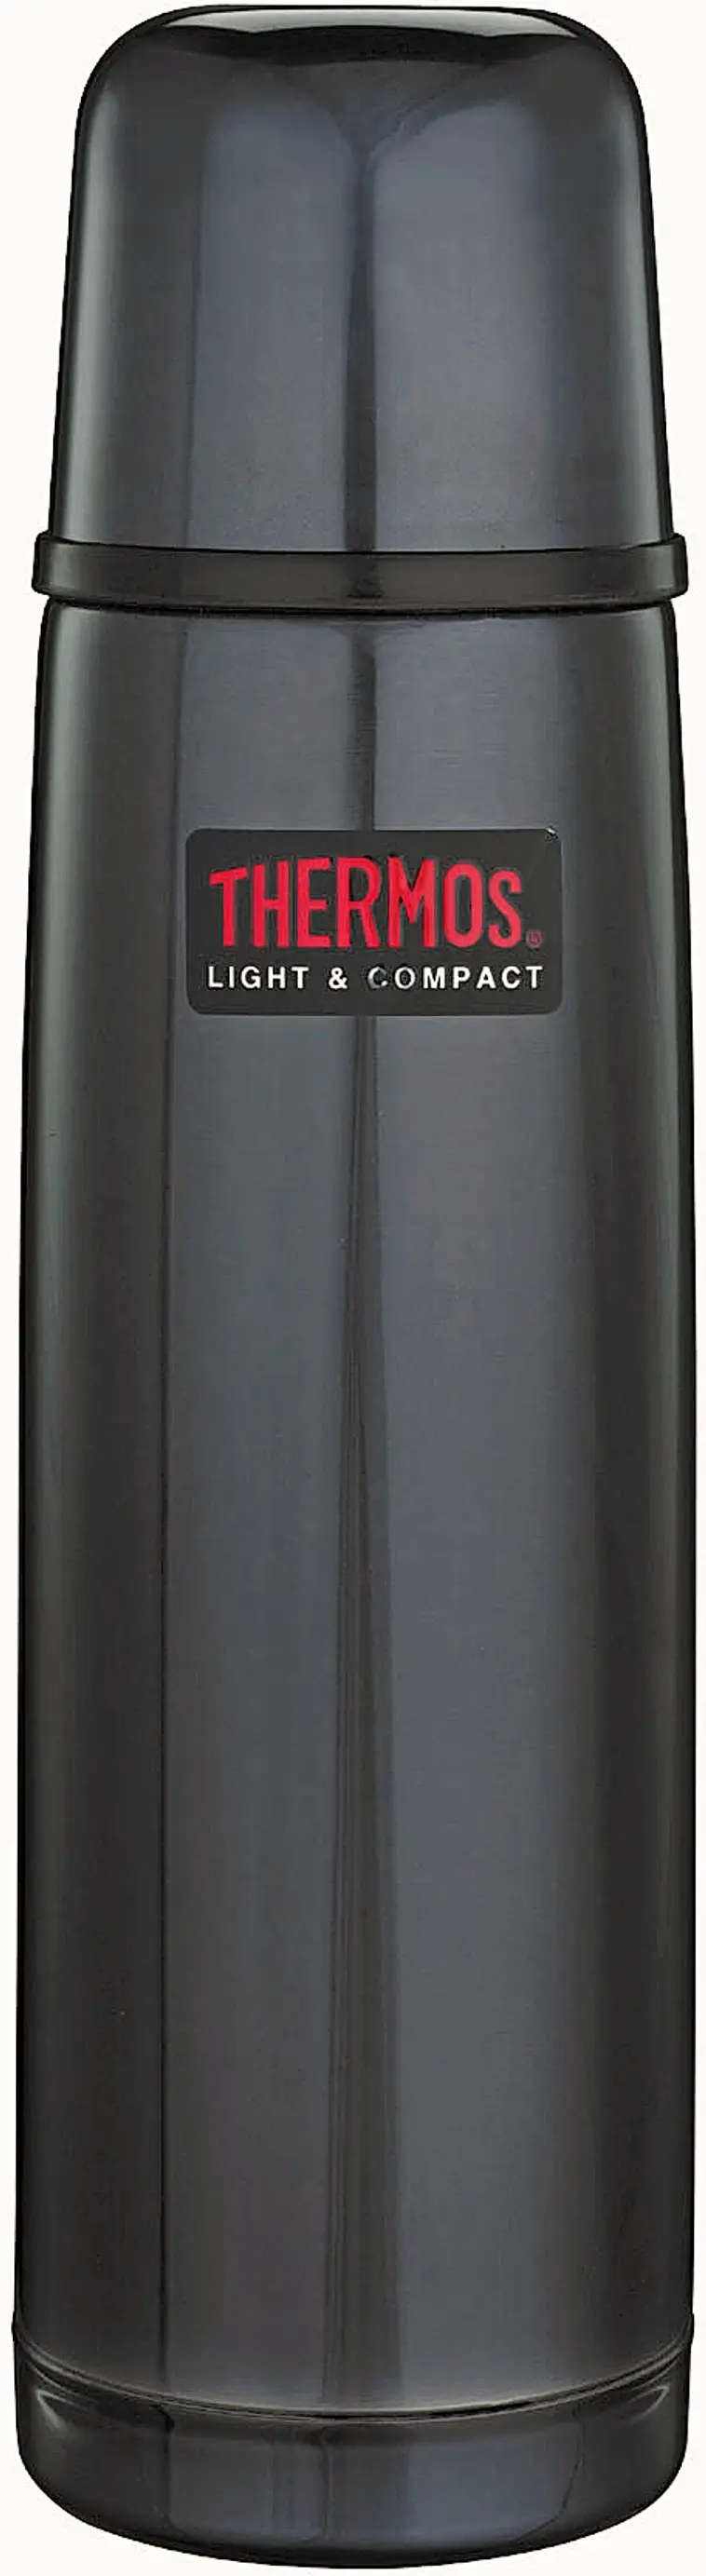 Thermos Light & Compact termospullo 0,5l